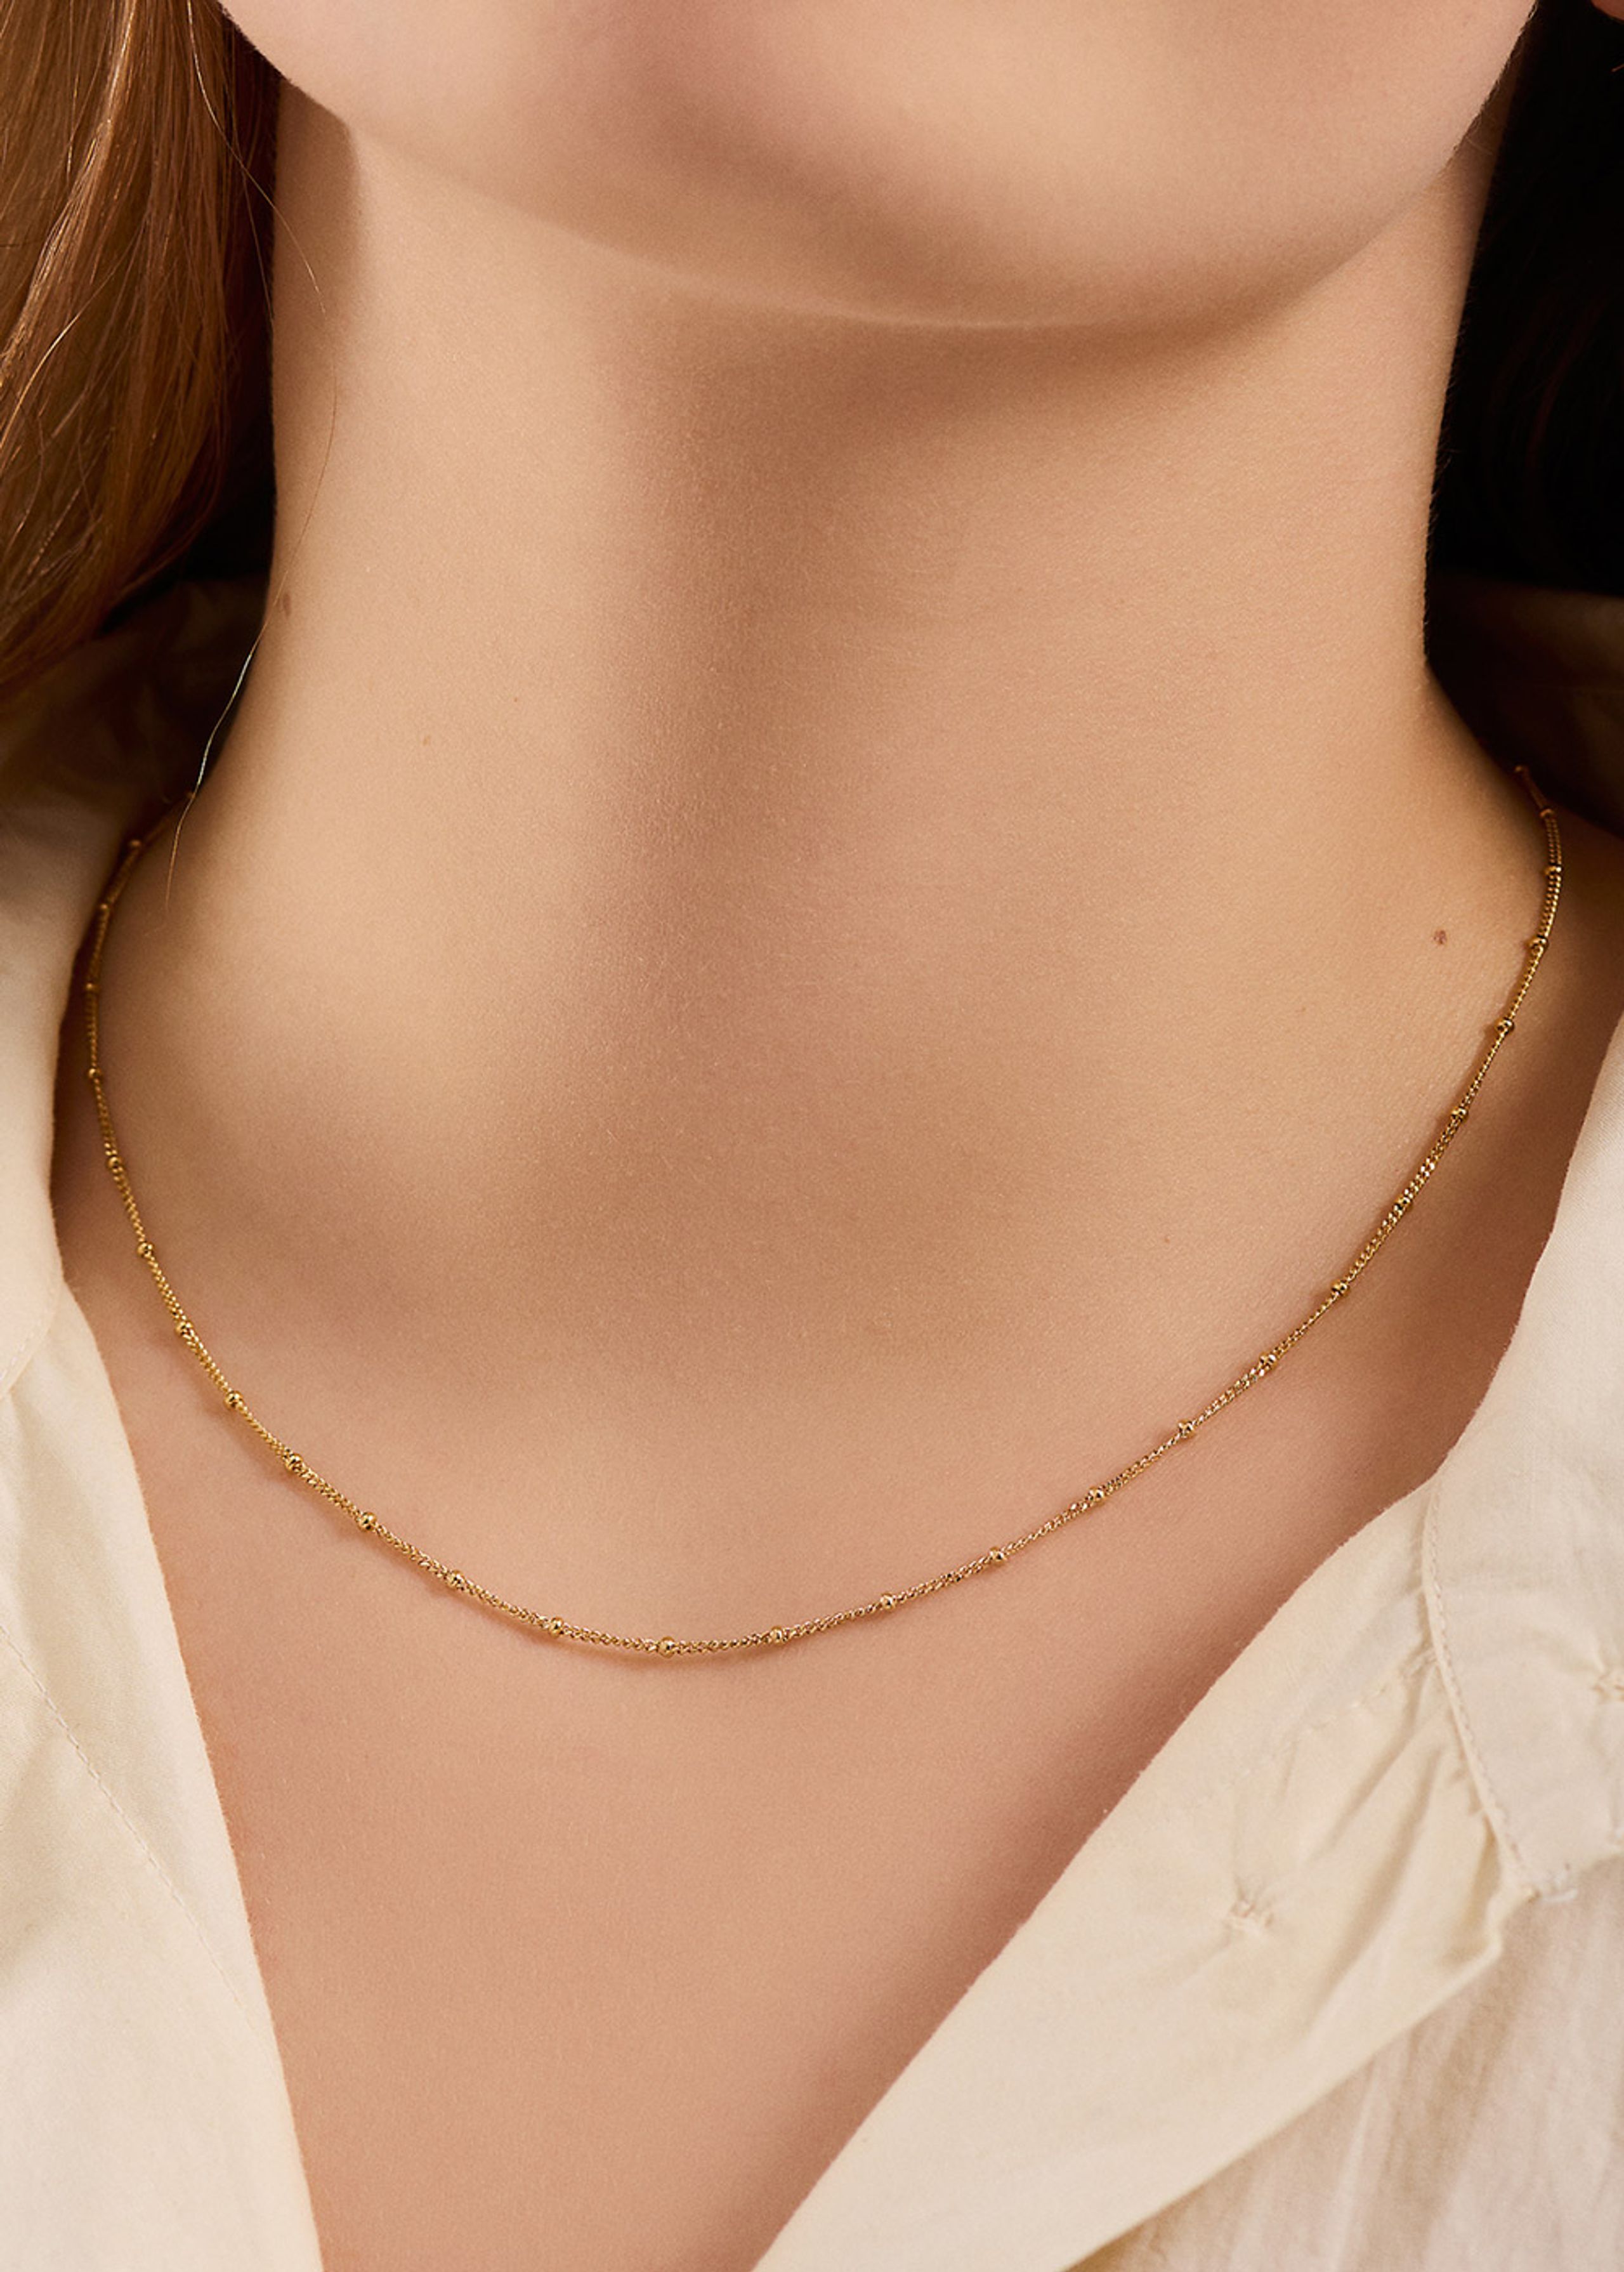 Pernille Corydon - Necklace - Solar Necklace - Gold